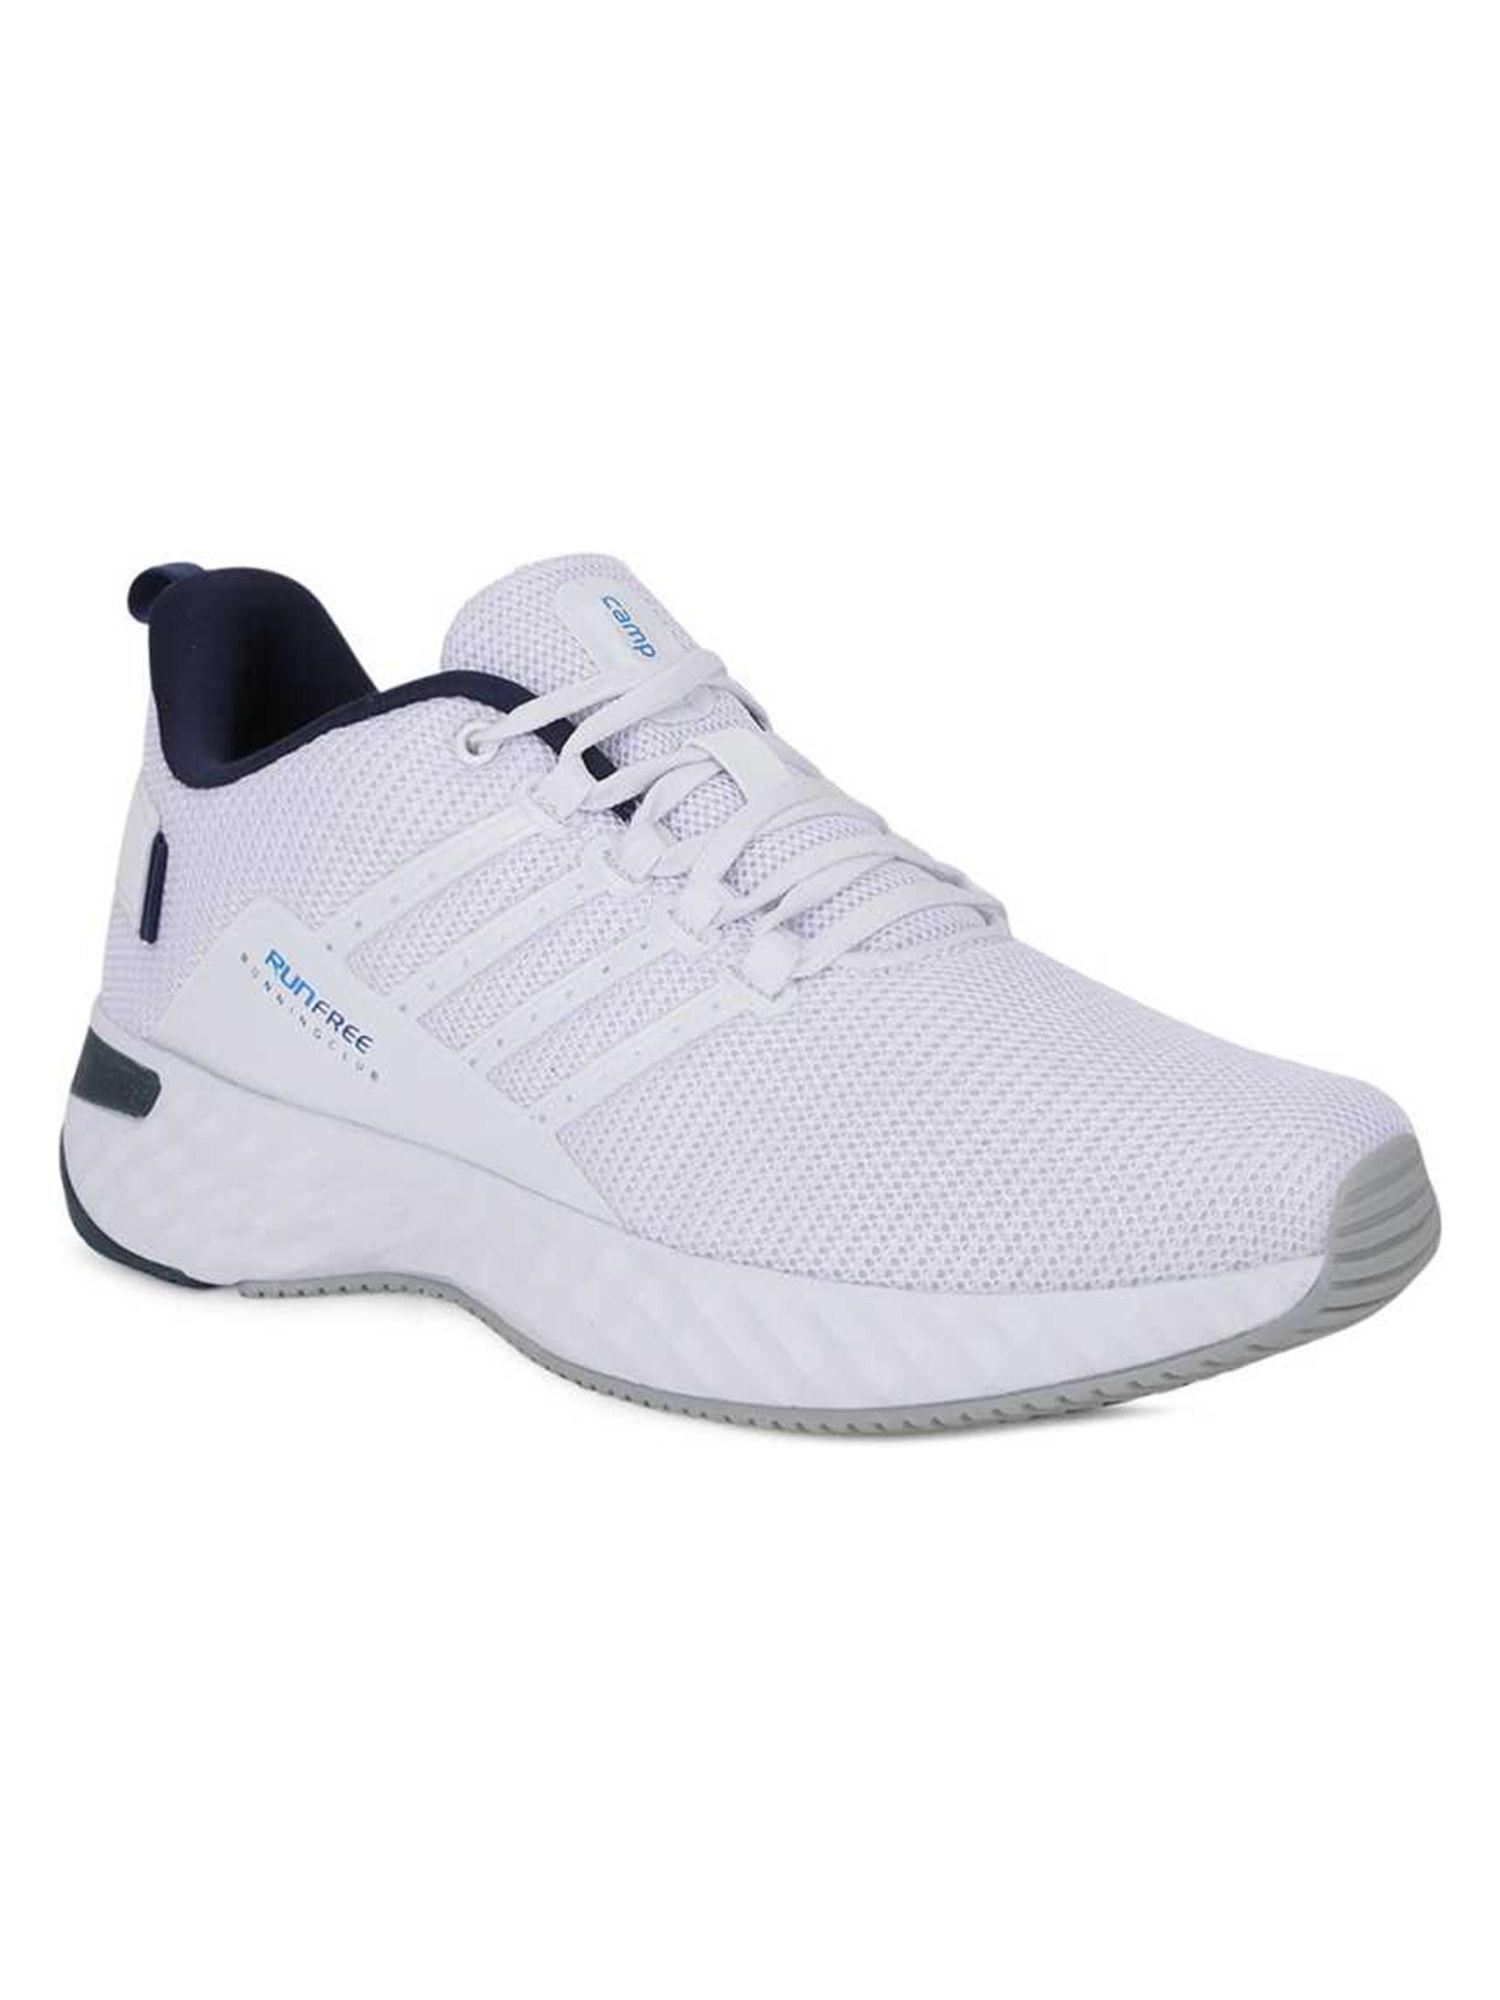 oslo-pro-white-running-shoes-for-men